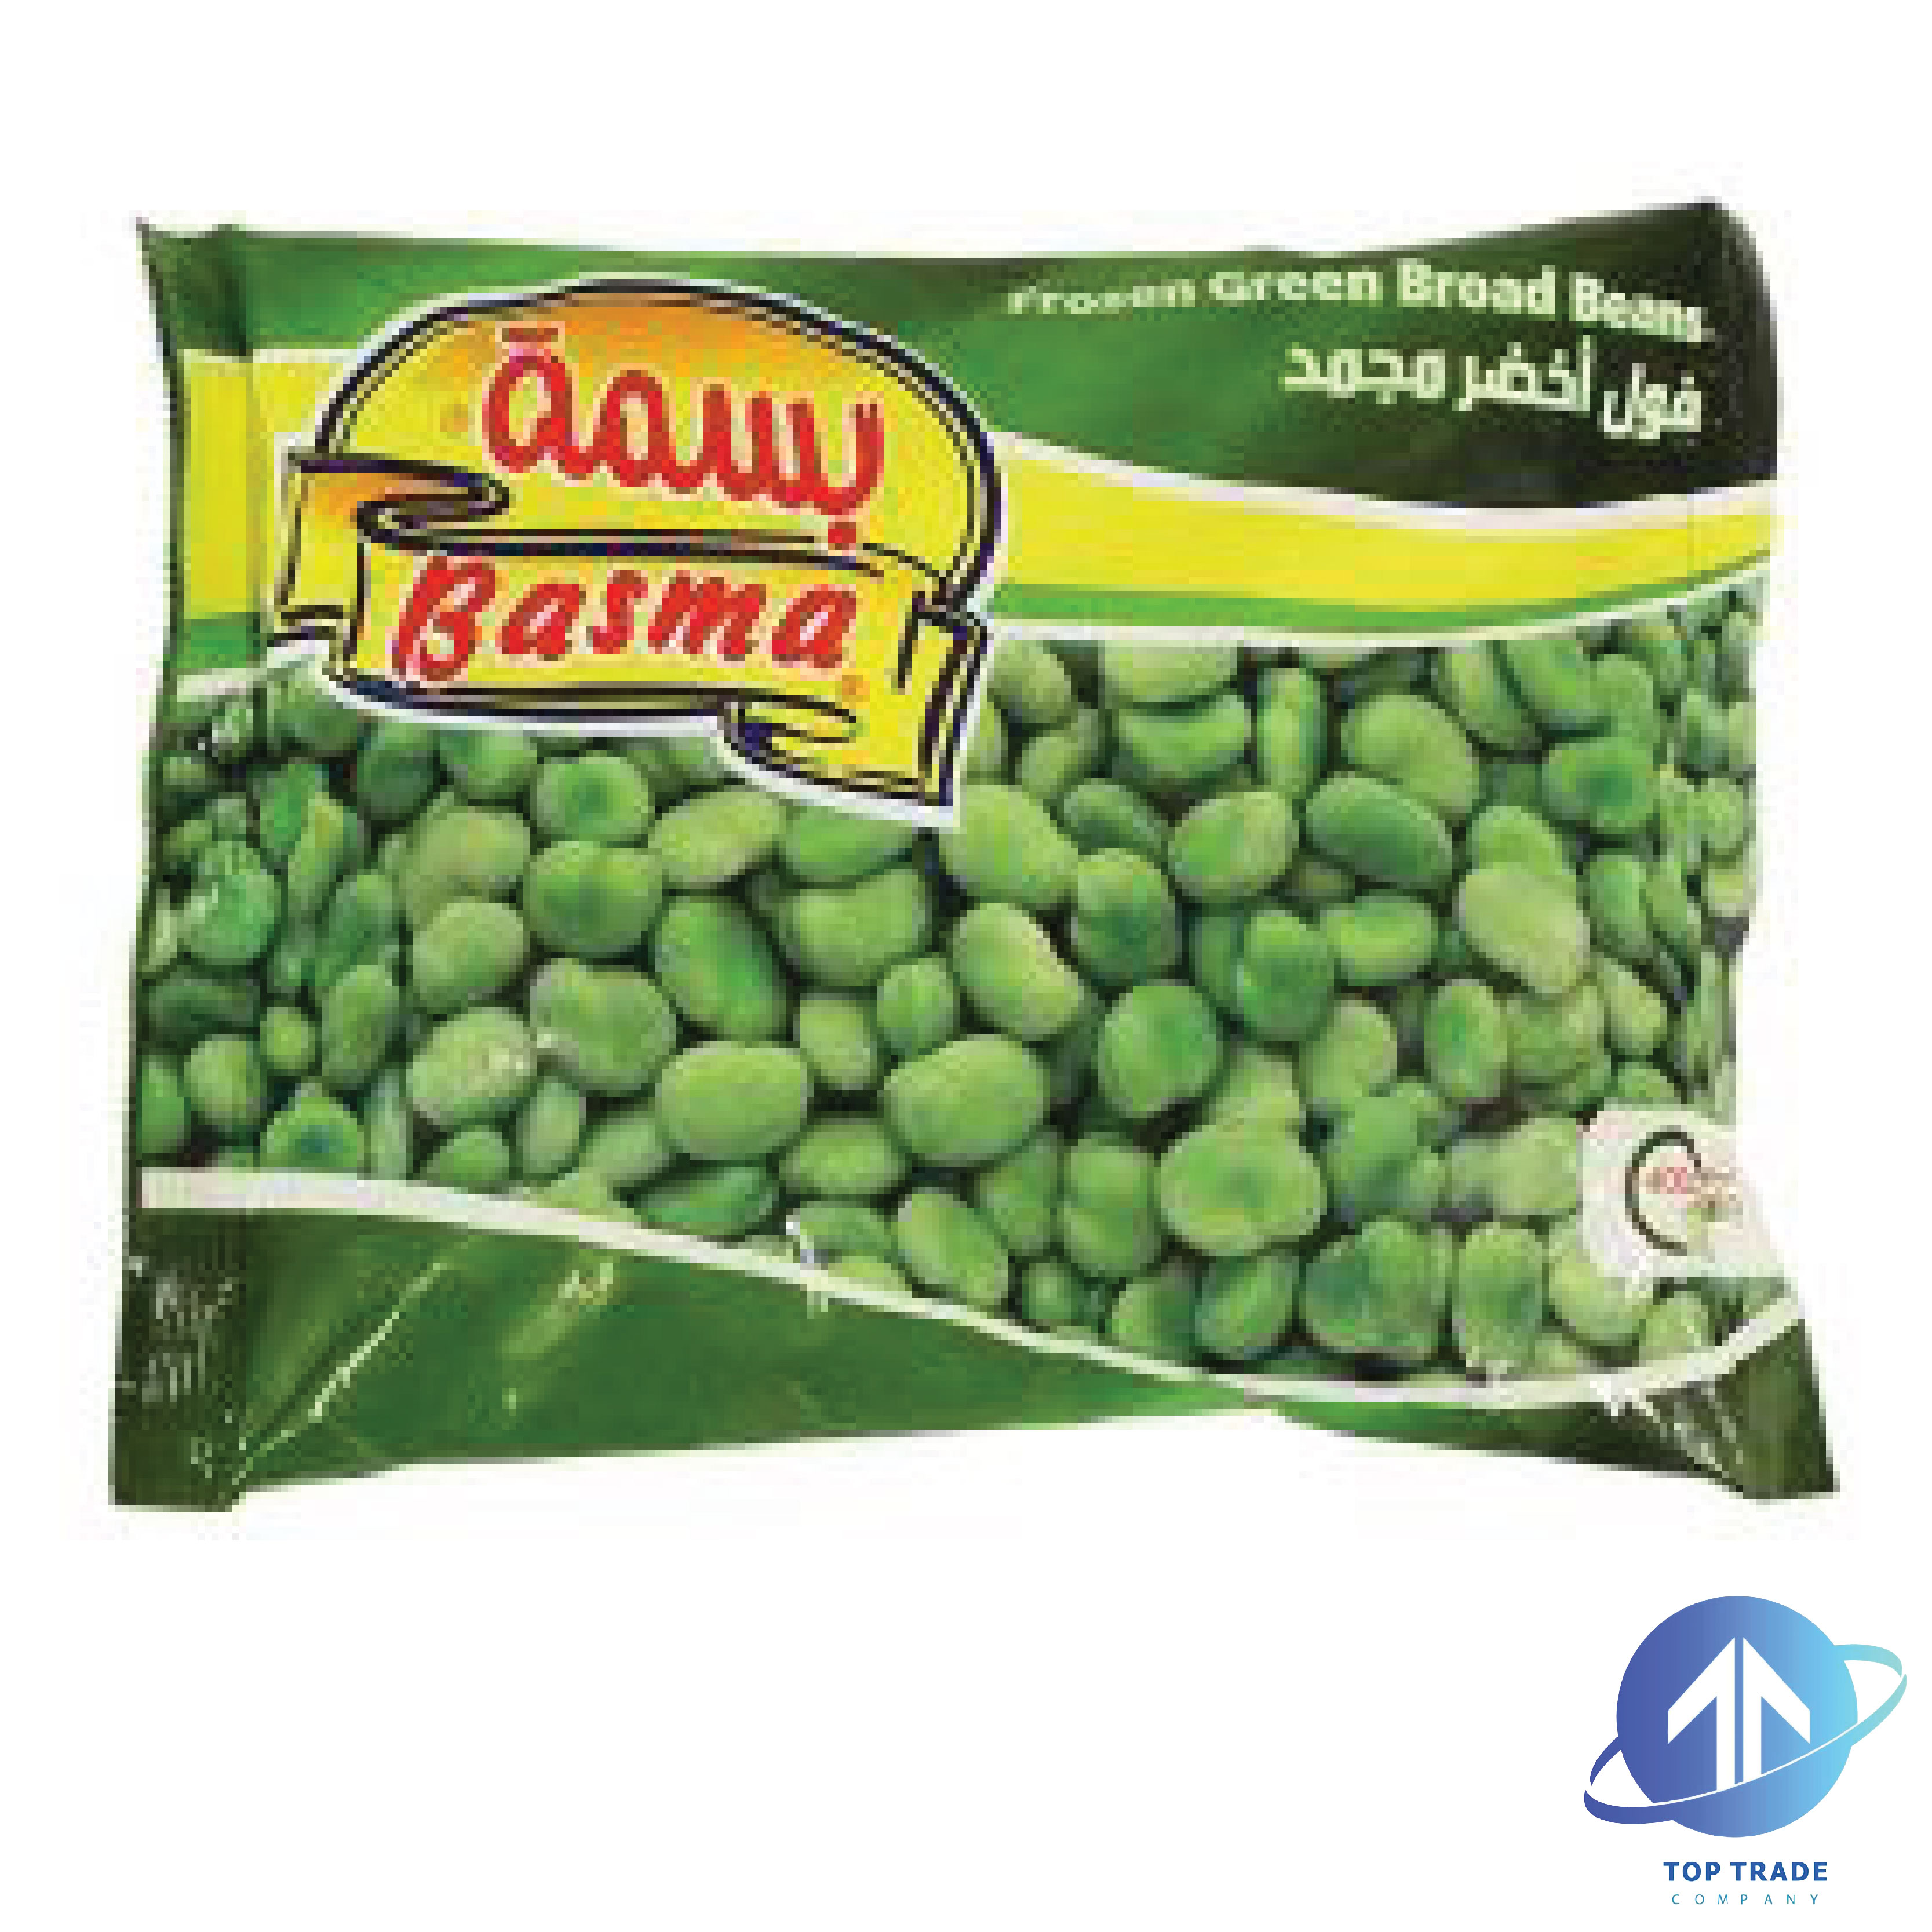 Basma Green Broad beans 400gr